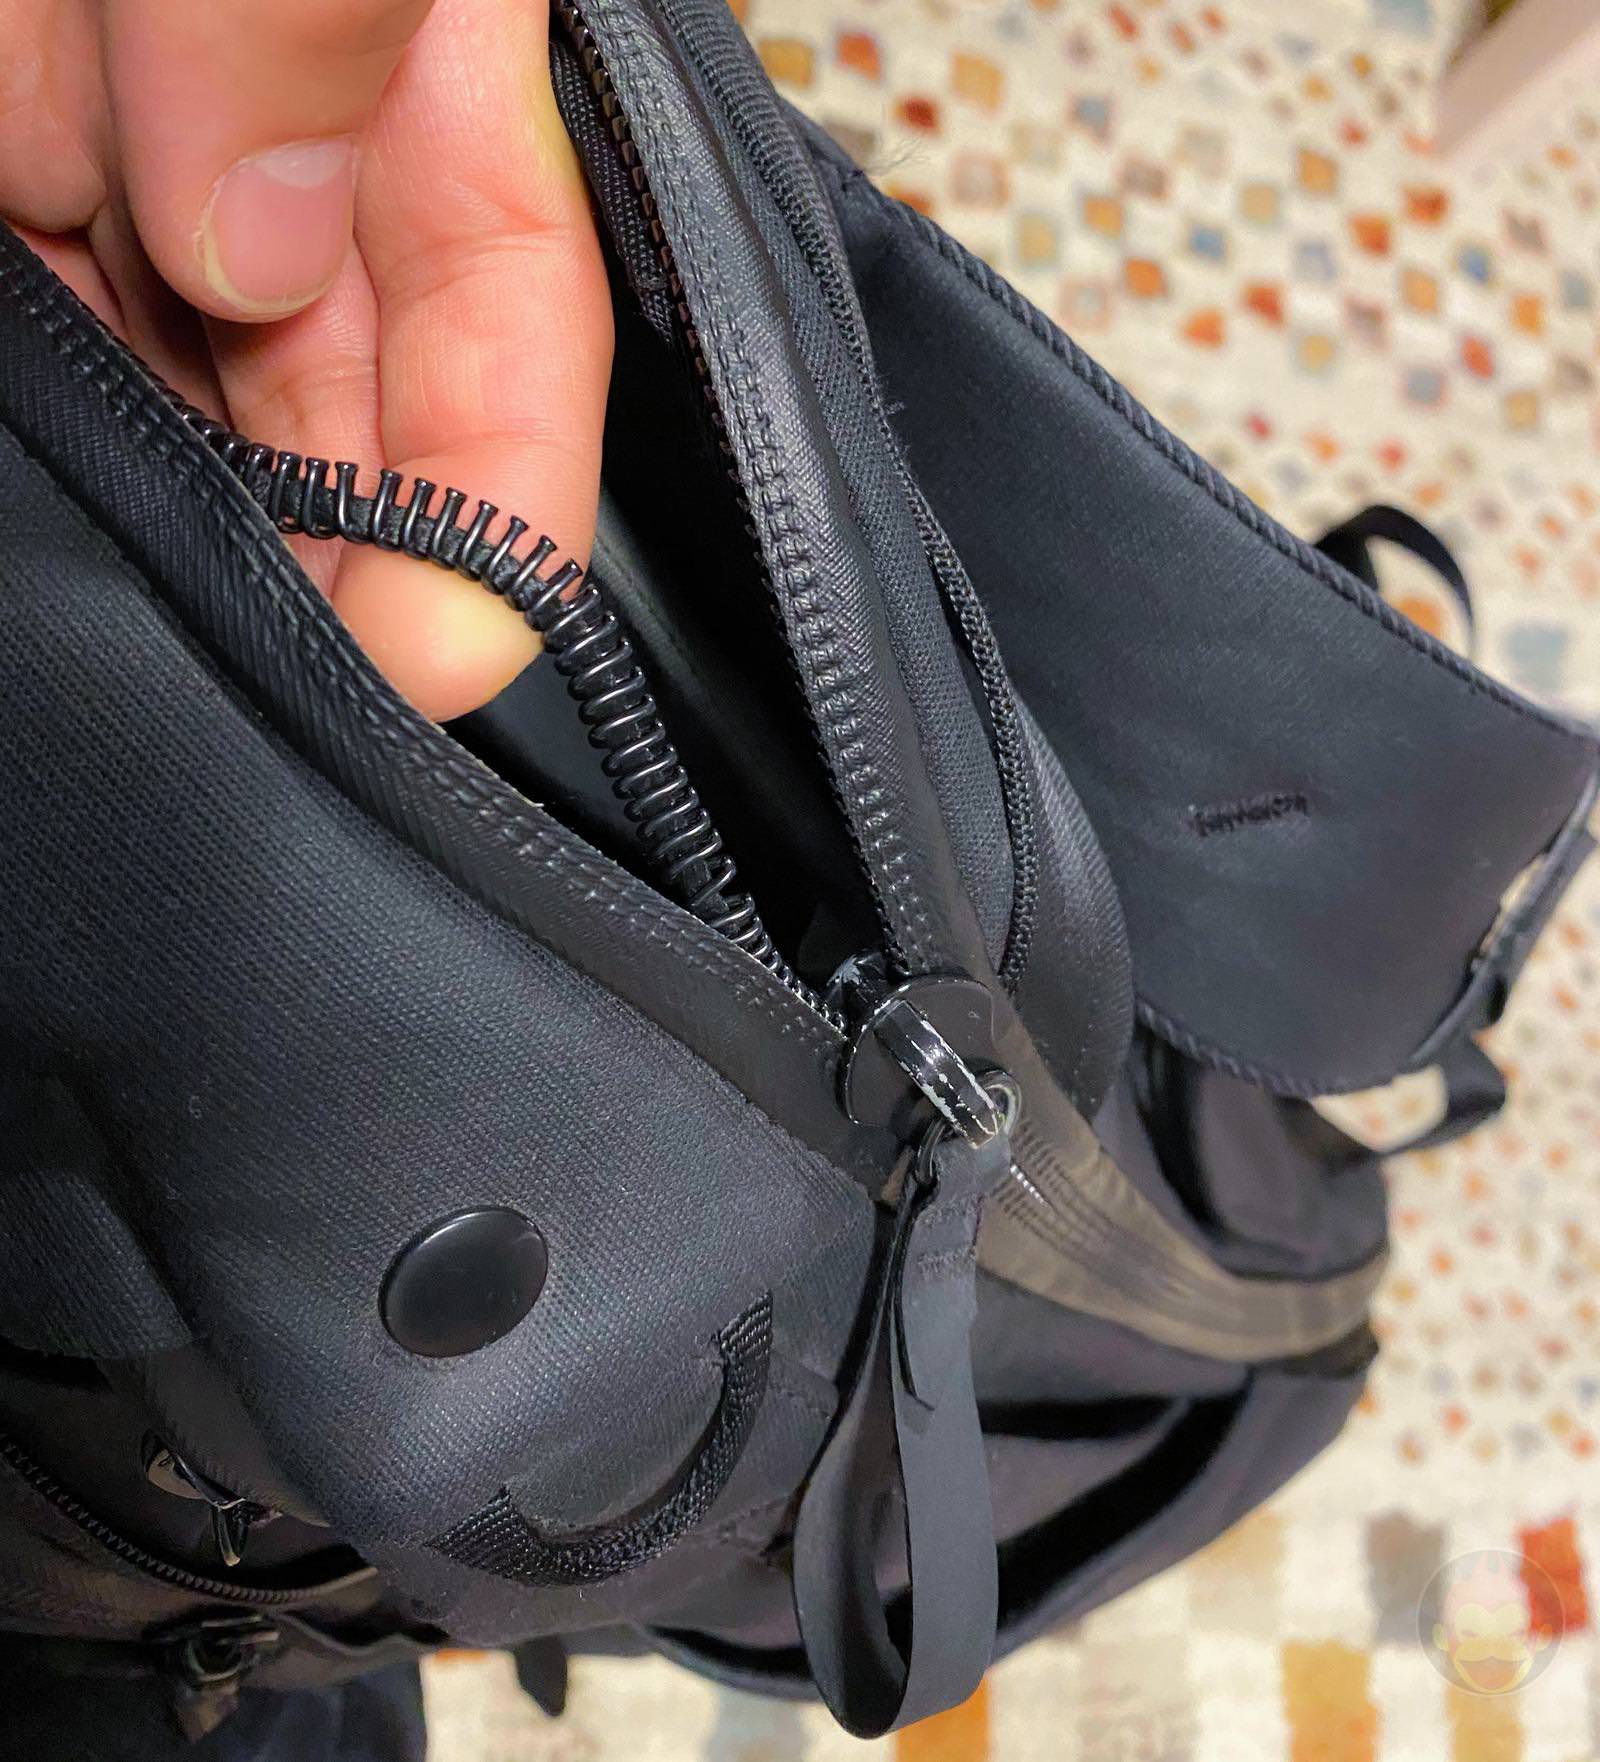 Kickstarter bought bag came back as a new bag 01